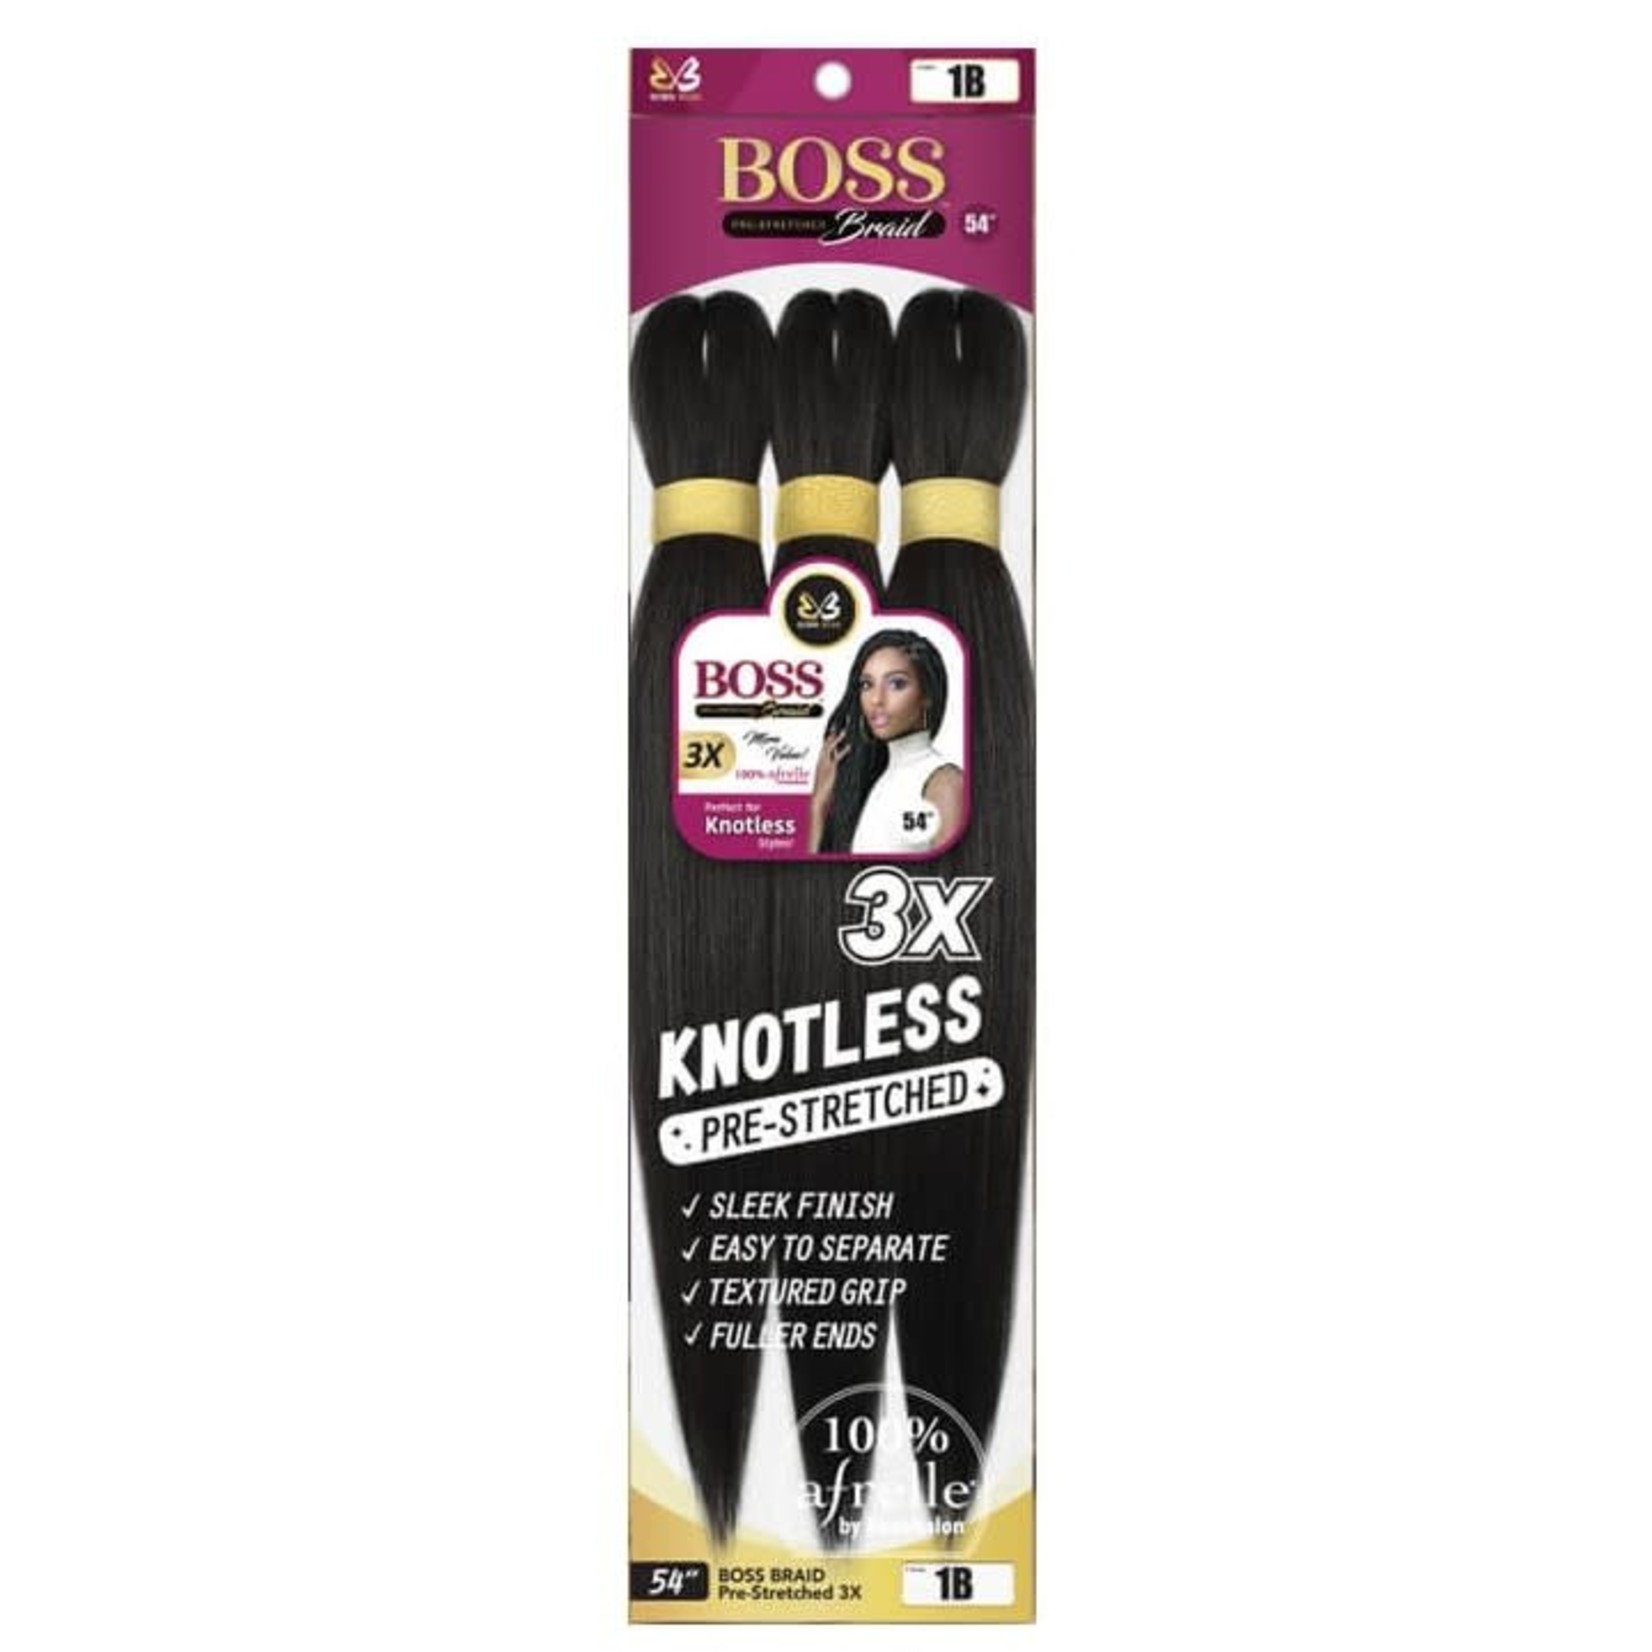 Bobbi Boss Boss Braid Knotless Pre-Stretched 3x